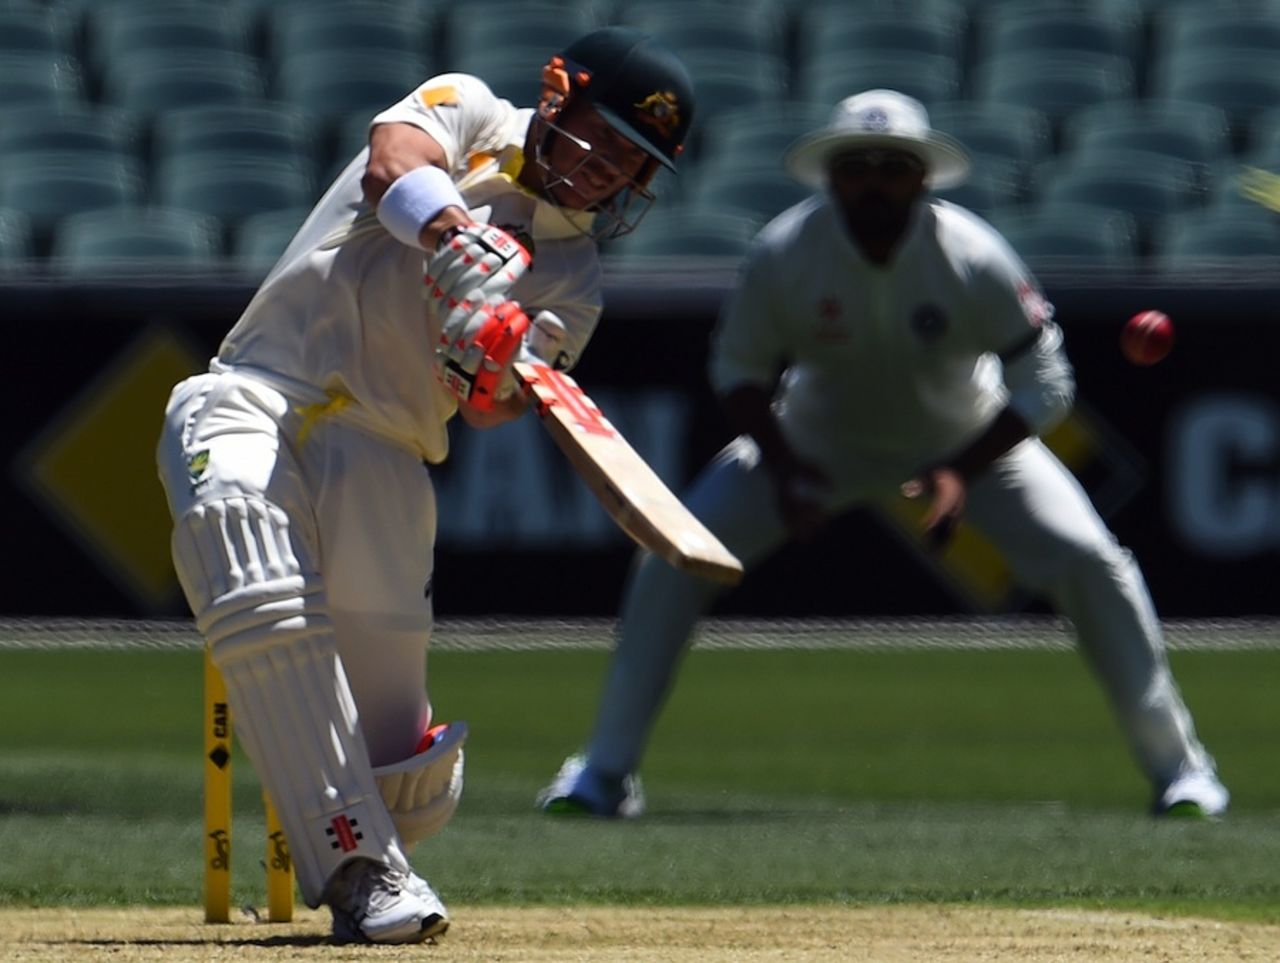 David Warner hits over the top, Australia v India, 1st Test, Adelaide, 1st day, December 9, 2014